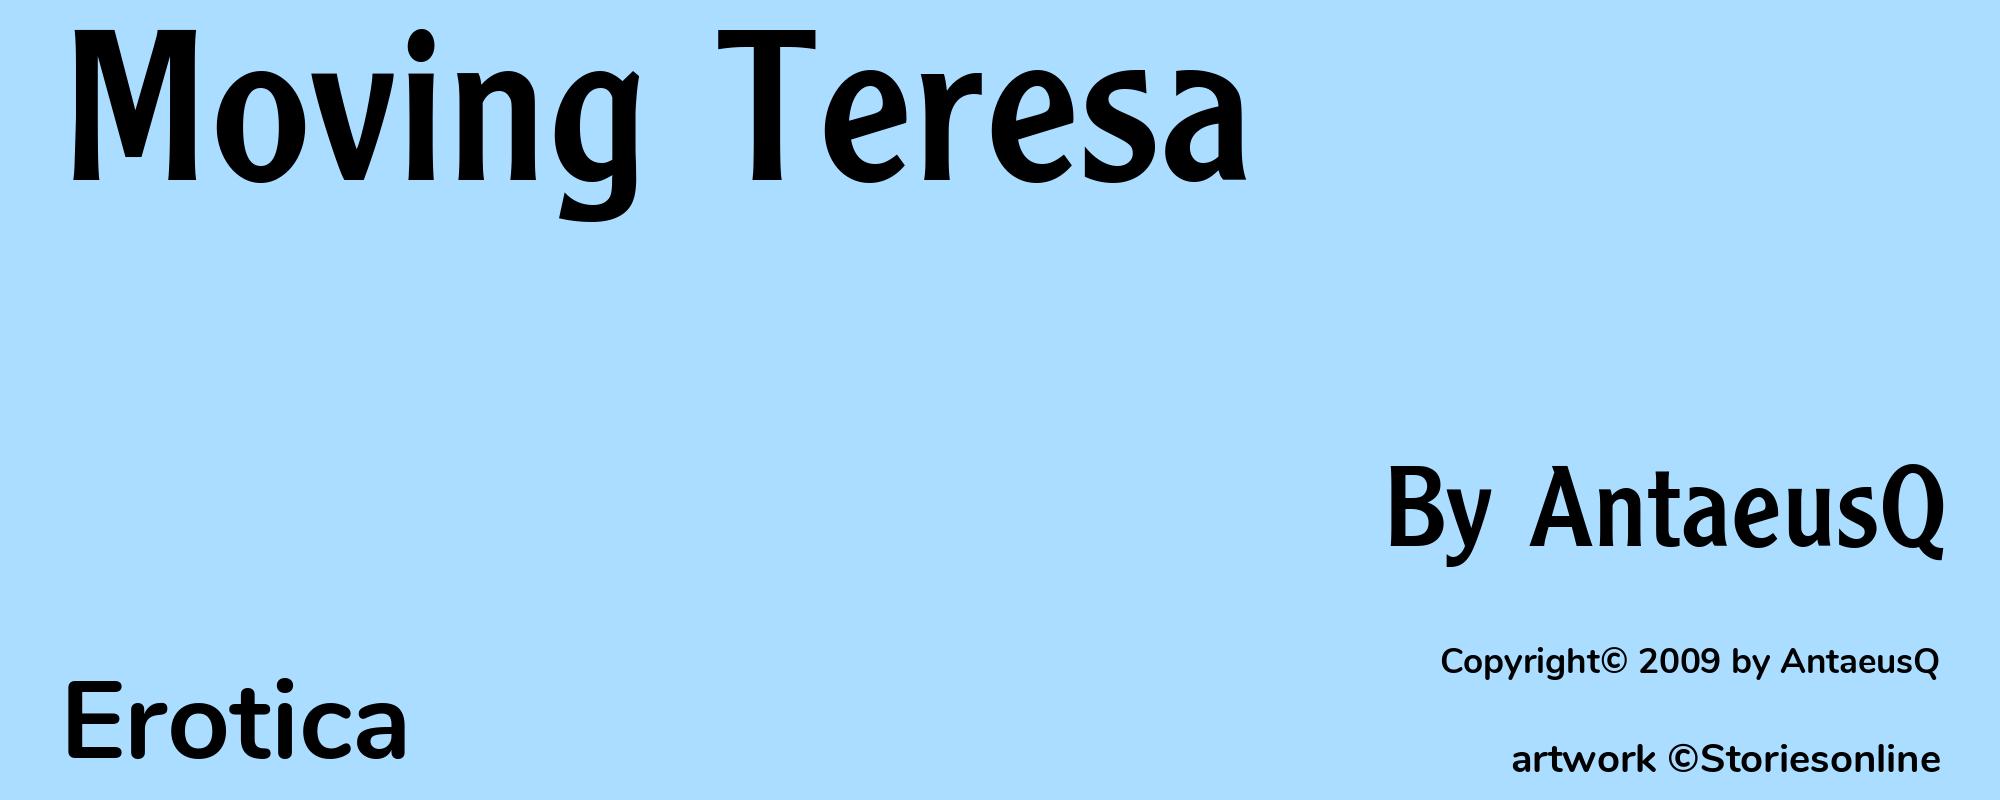 Moving Teresa - Cover